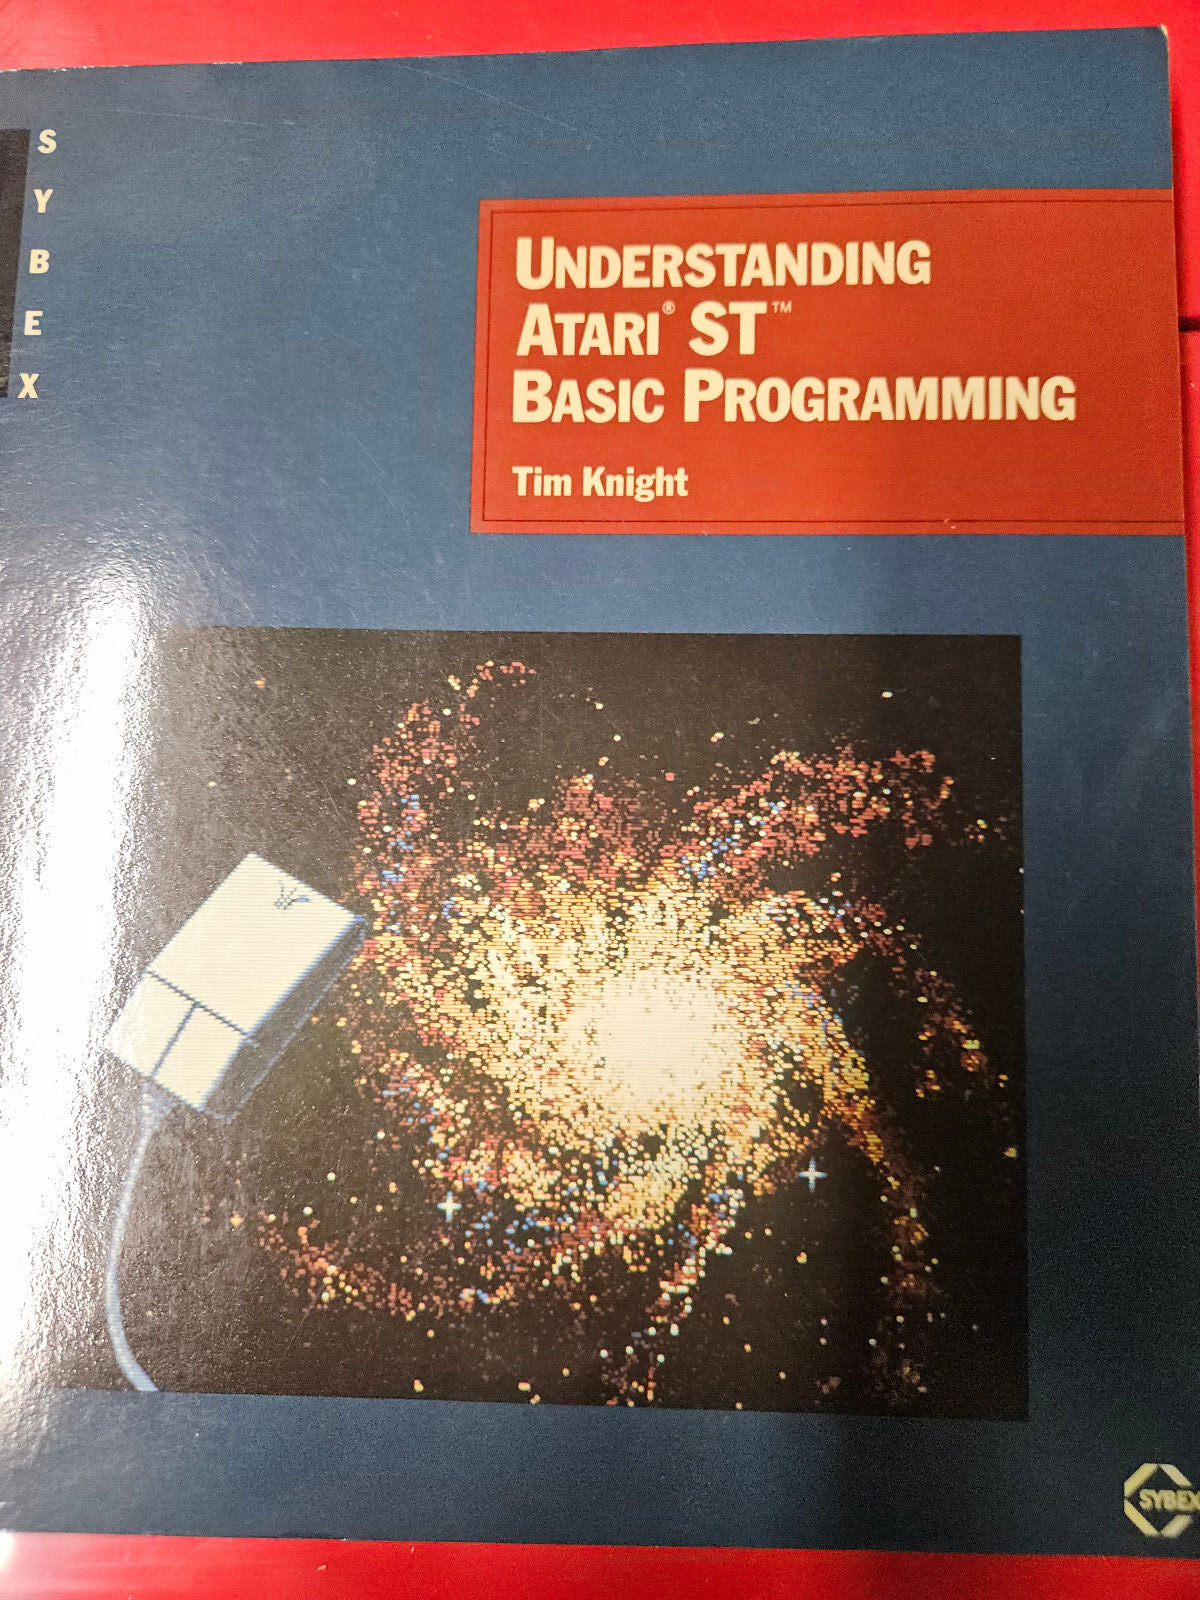 Understanding ATARI ST Basic Programming by Tim Knight